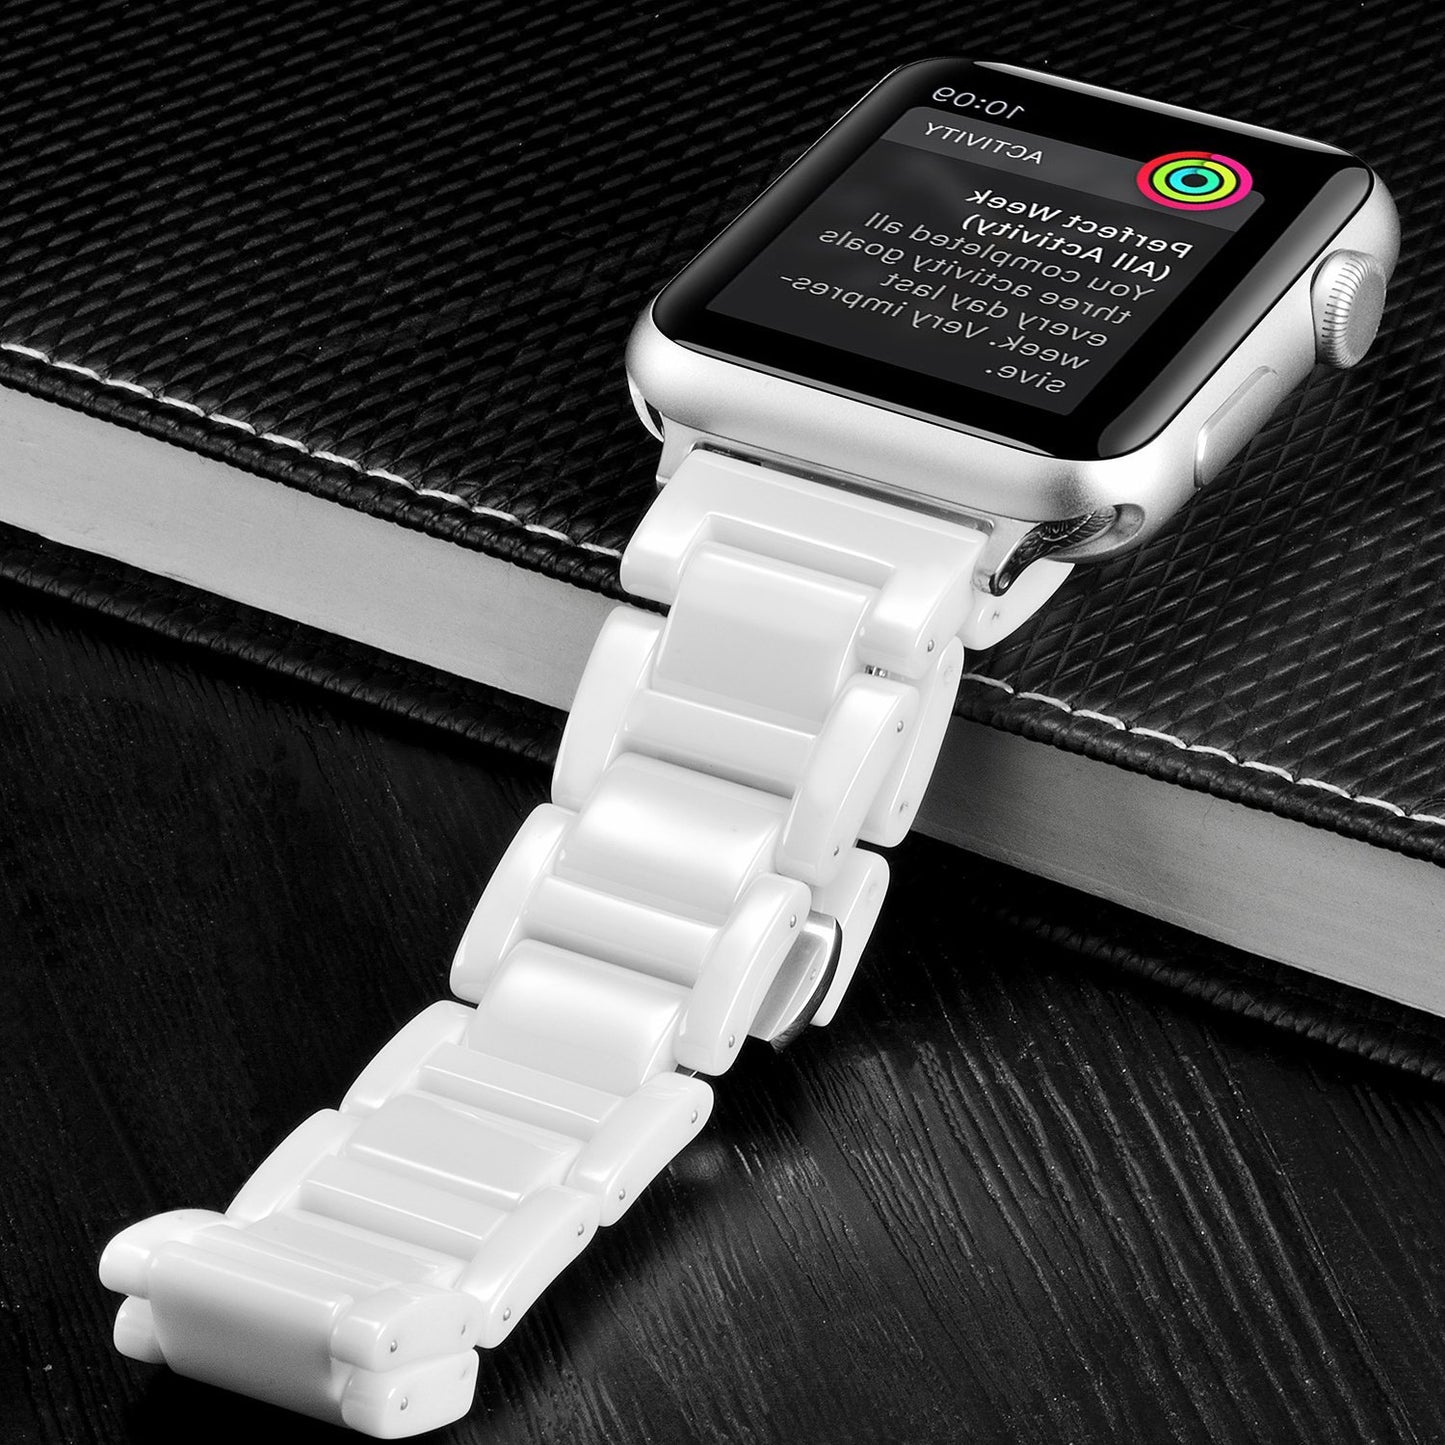 Aviato Keramik Armband für Apple Watch